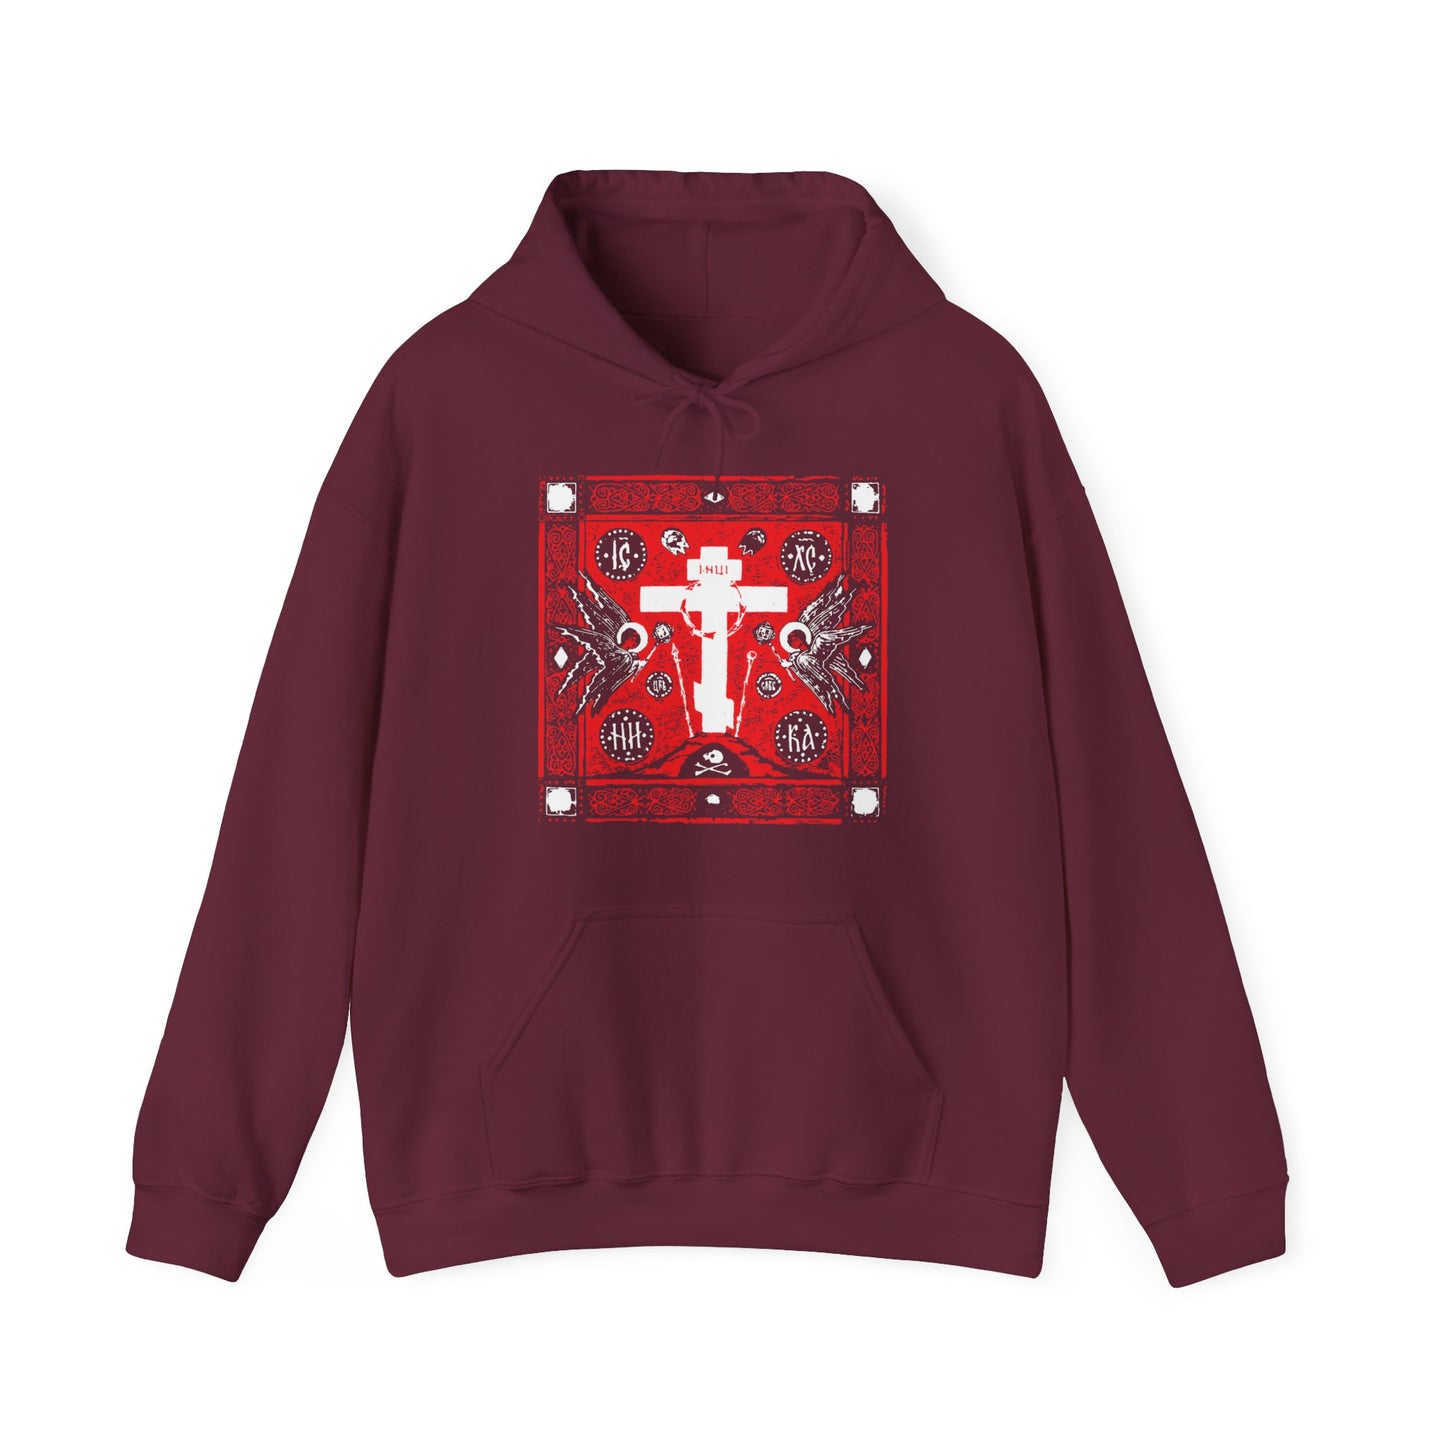 Adoration of the Holy Cross No. 1 | Orthodox Christian Hoodie / Hooded Sweatshirt